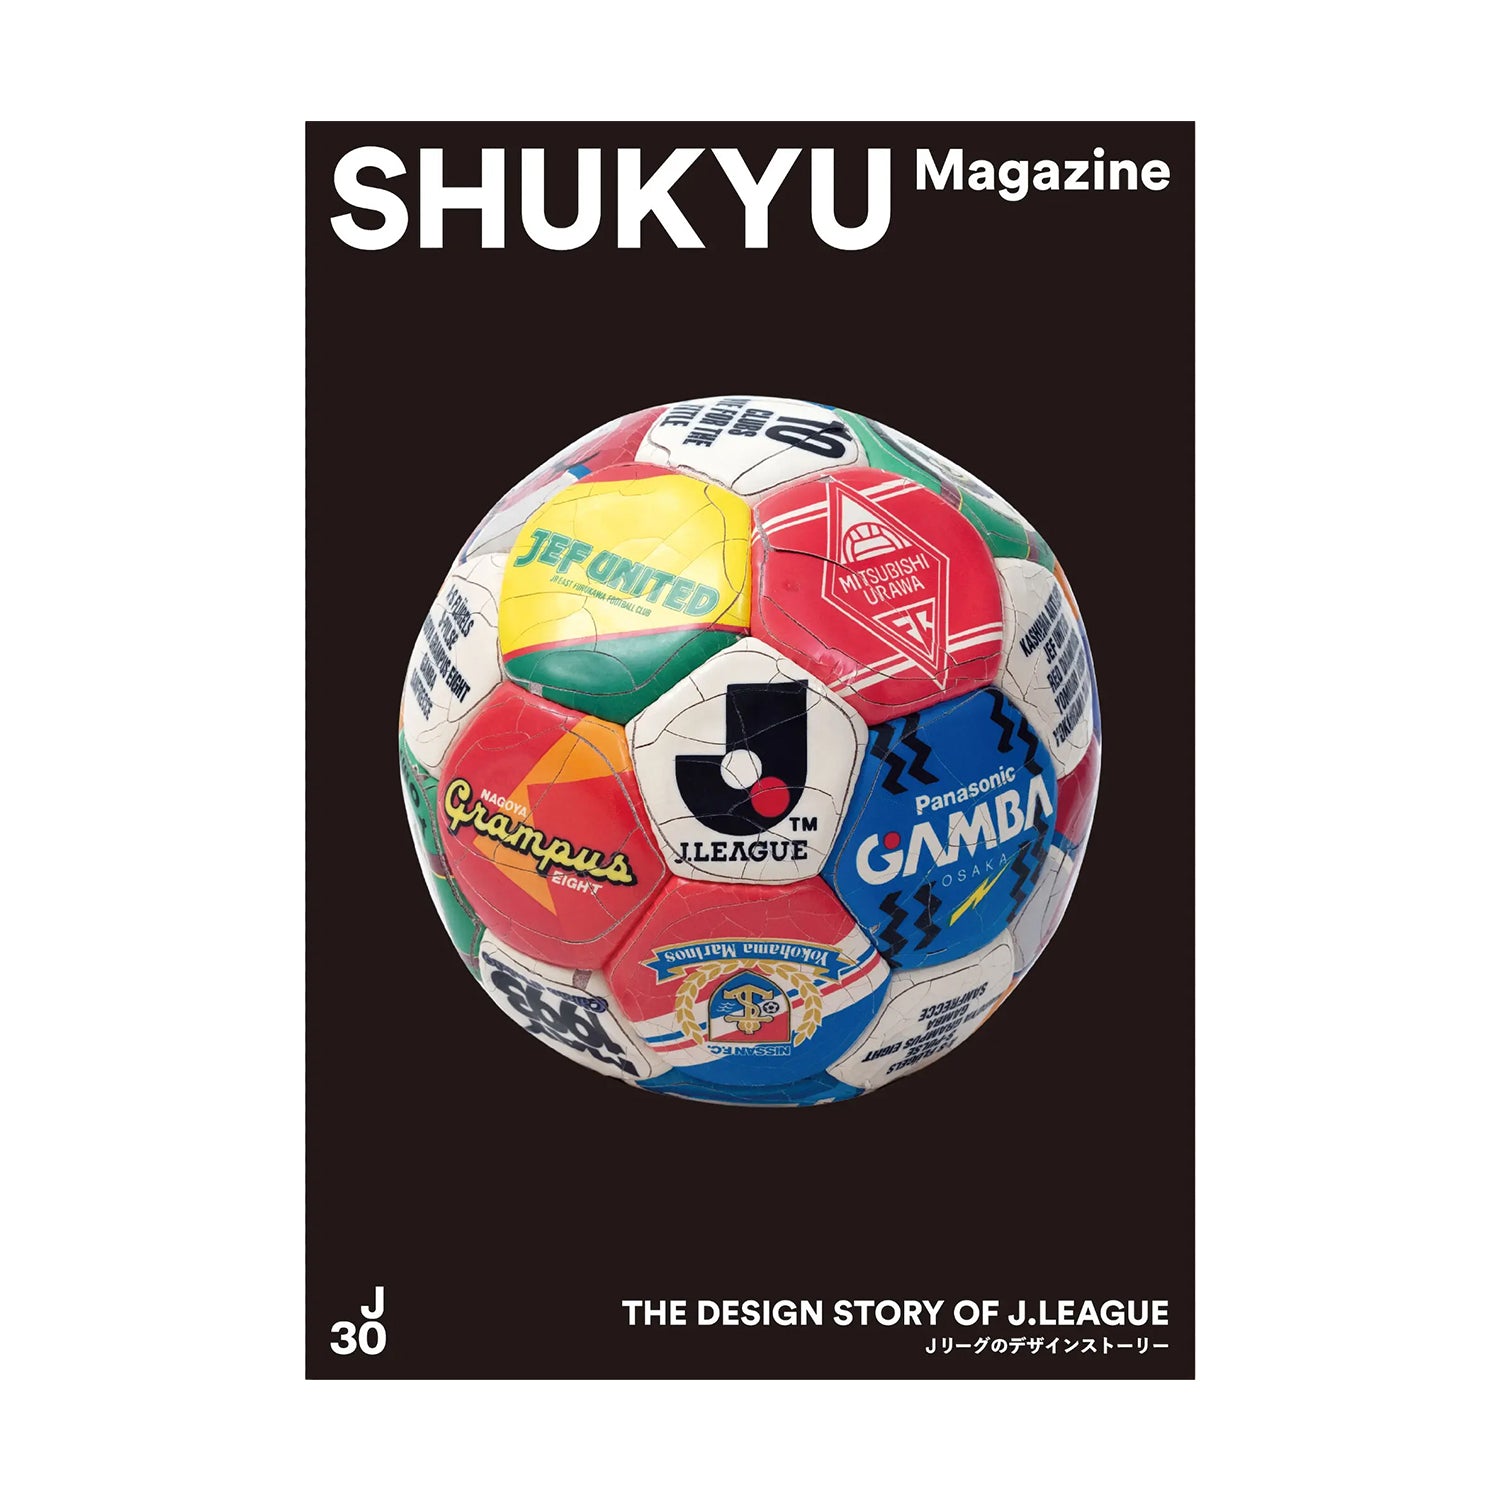 Shukyu Magazine: The Design Story of J.League